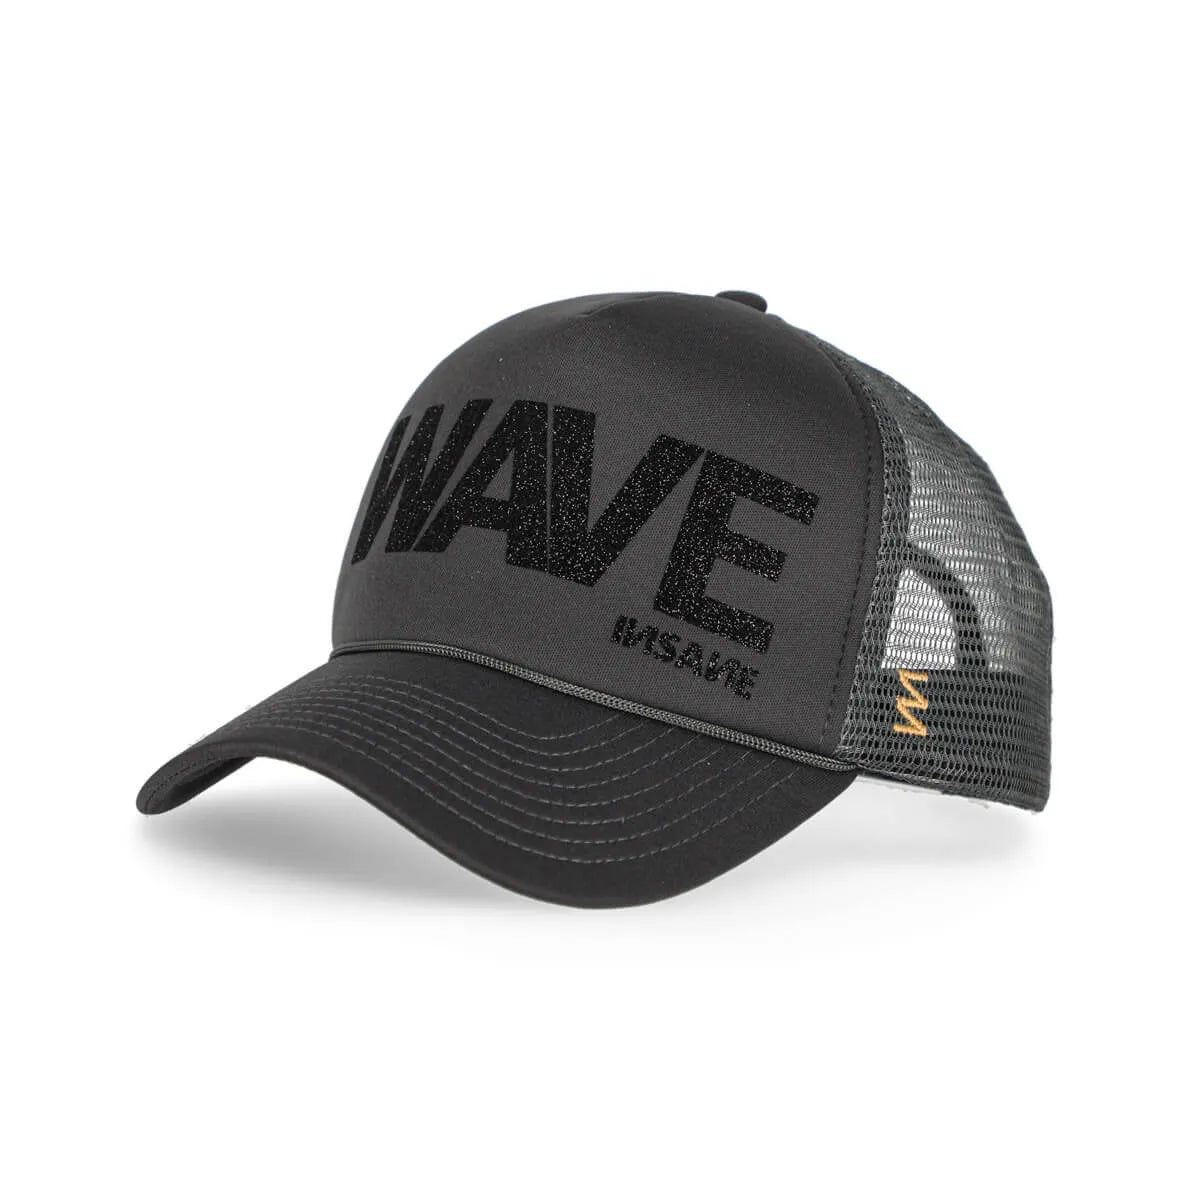 WAVE TRUCKER DARK GREY & BLACK GLITTER CAP